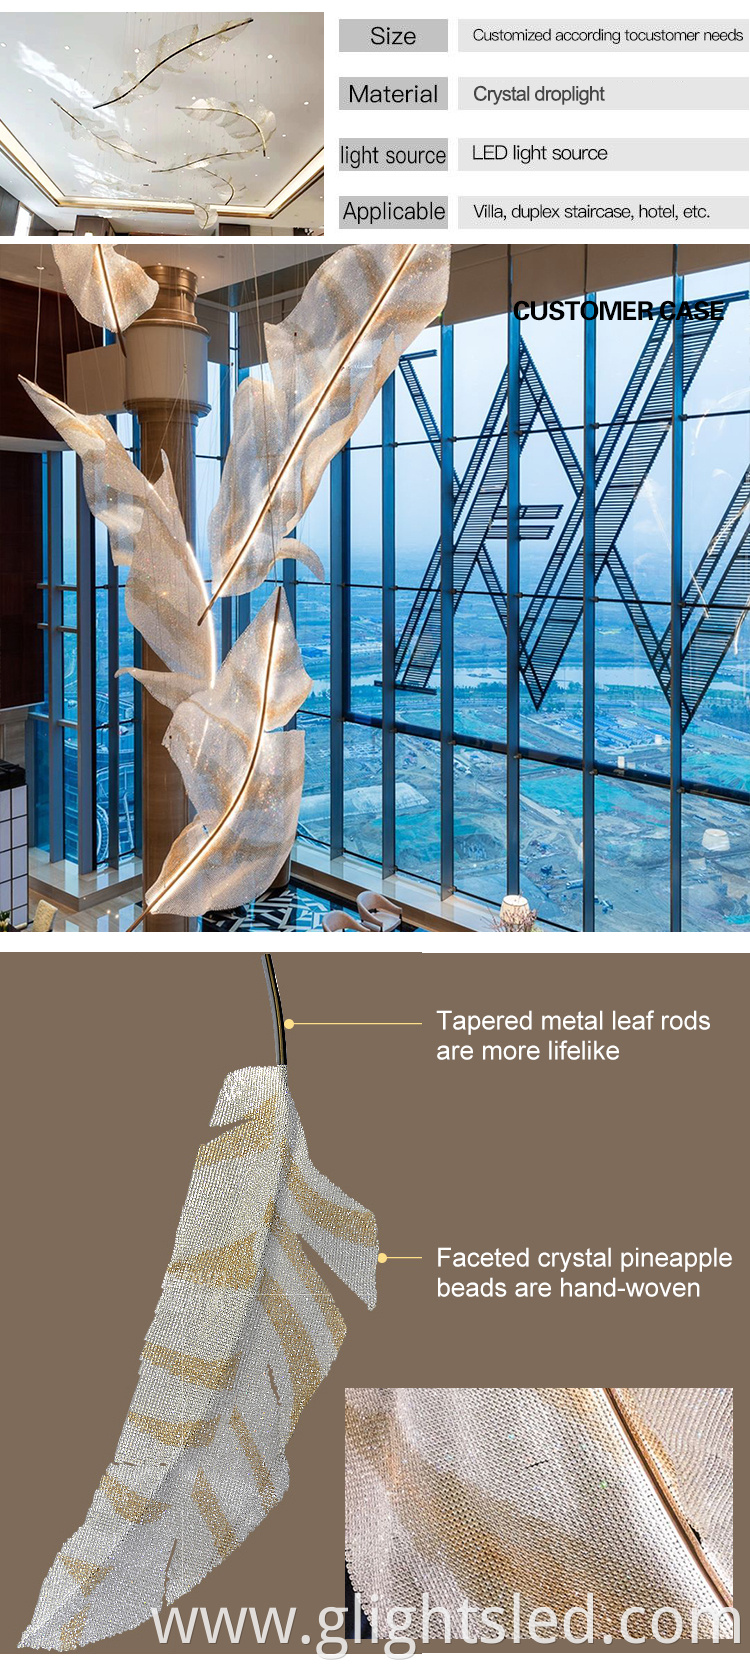 Hot sale modern indoor decoration lighting white feather K9 crystal luxury led chandelier